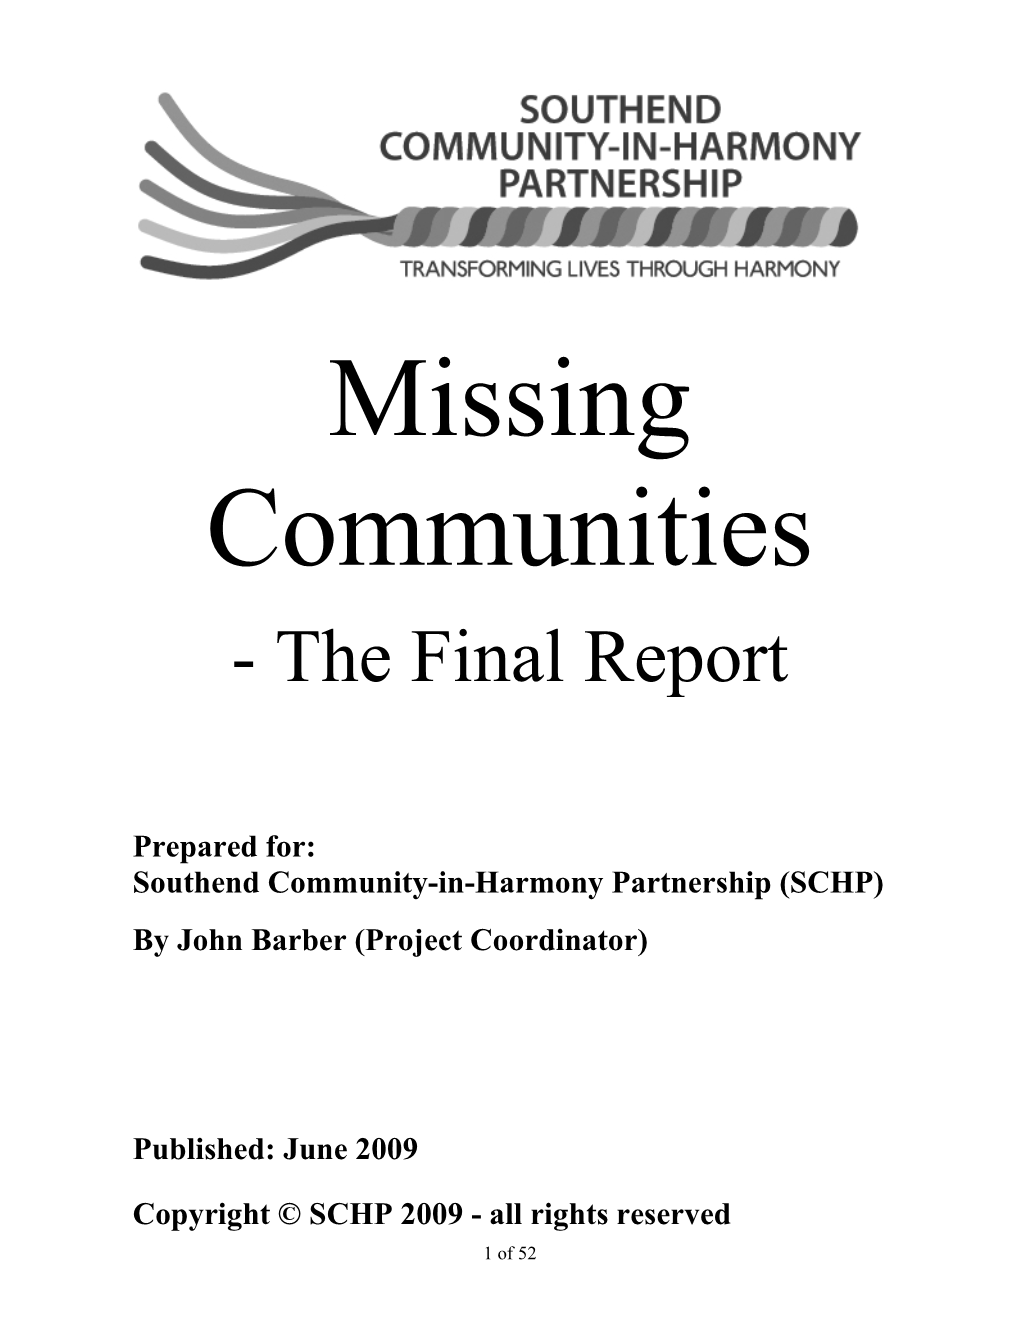 Missing Communities Final Report V7